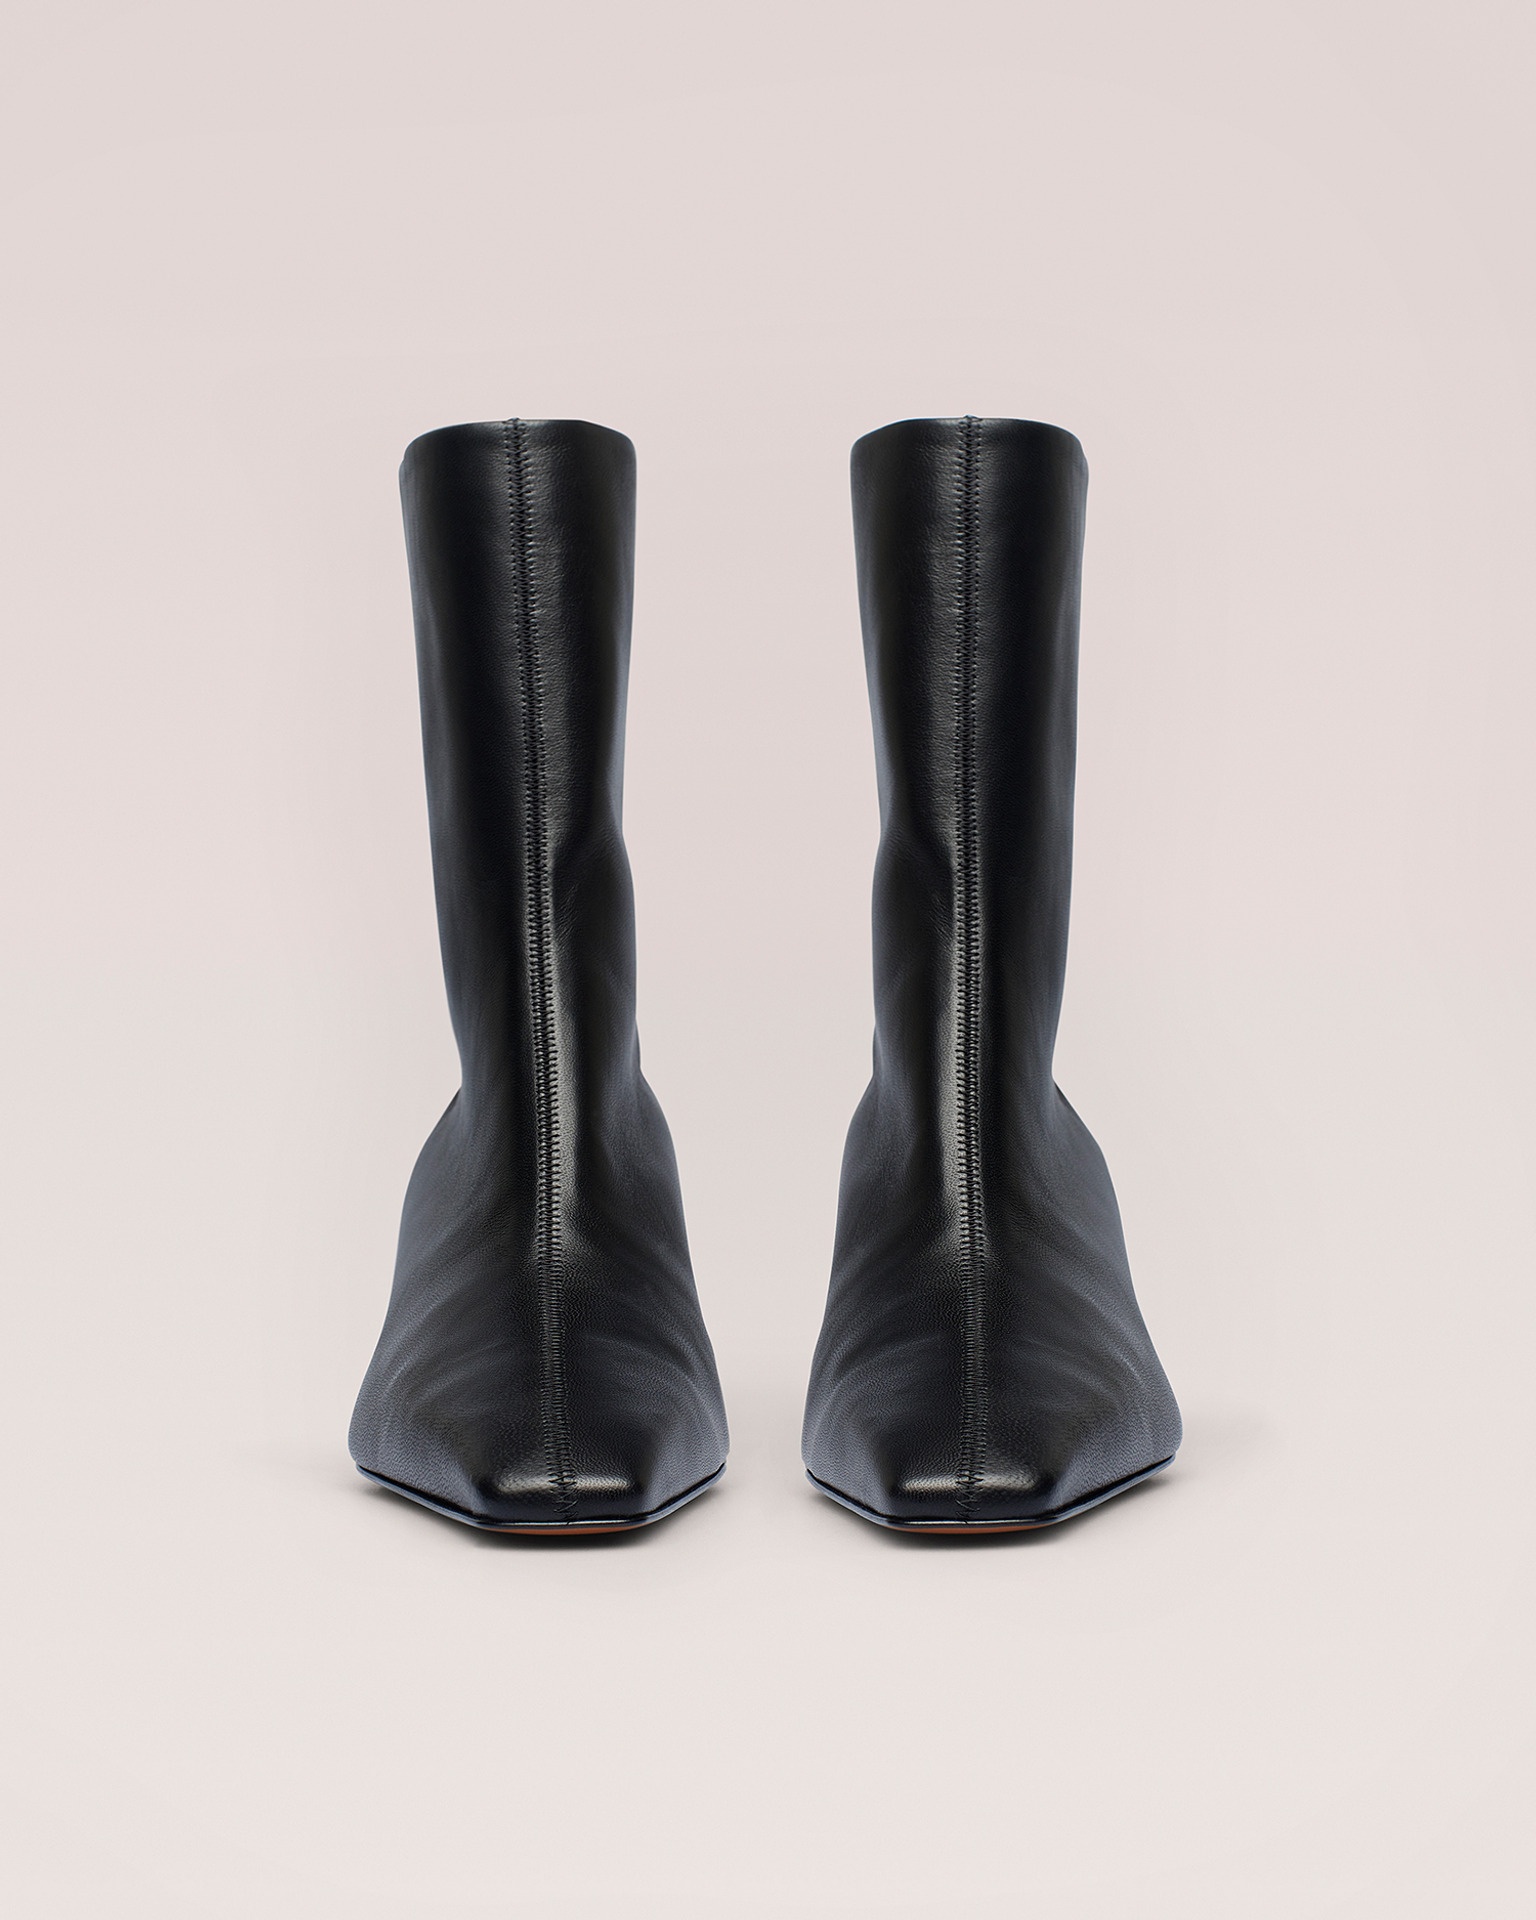 TALLI - Elongated square toe booties with metal heels - Black - 2